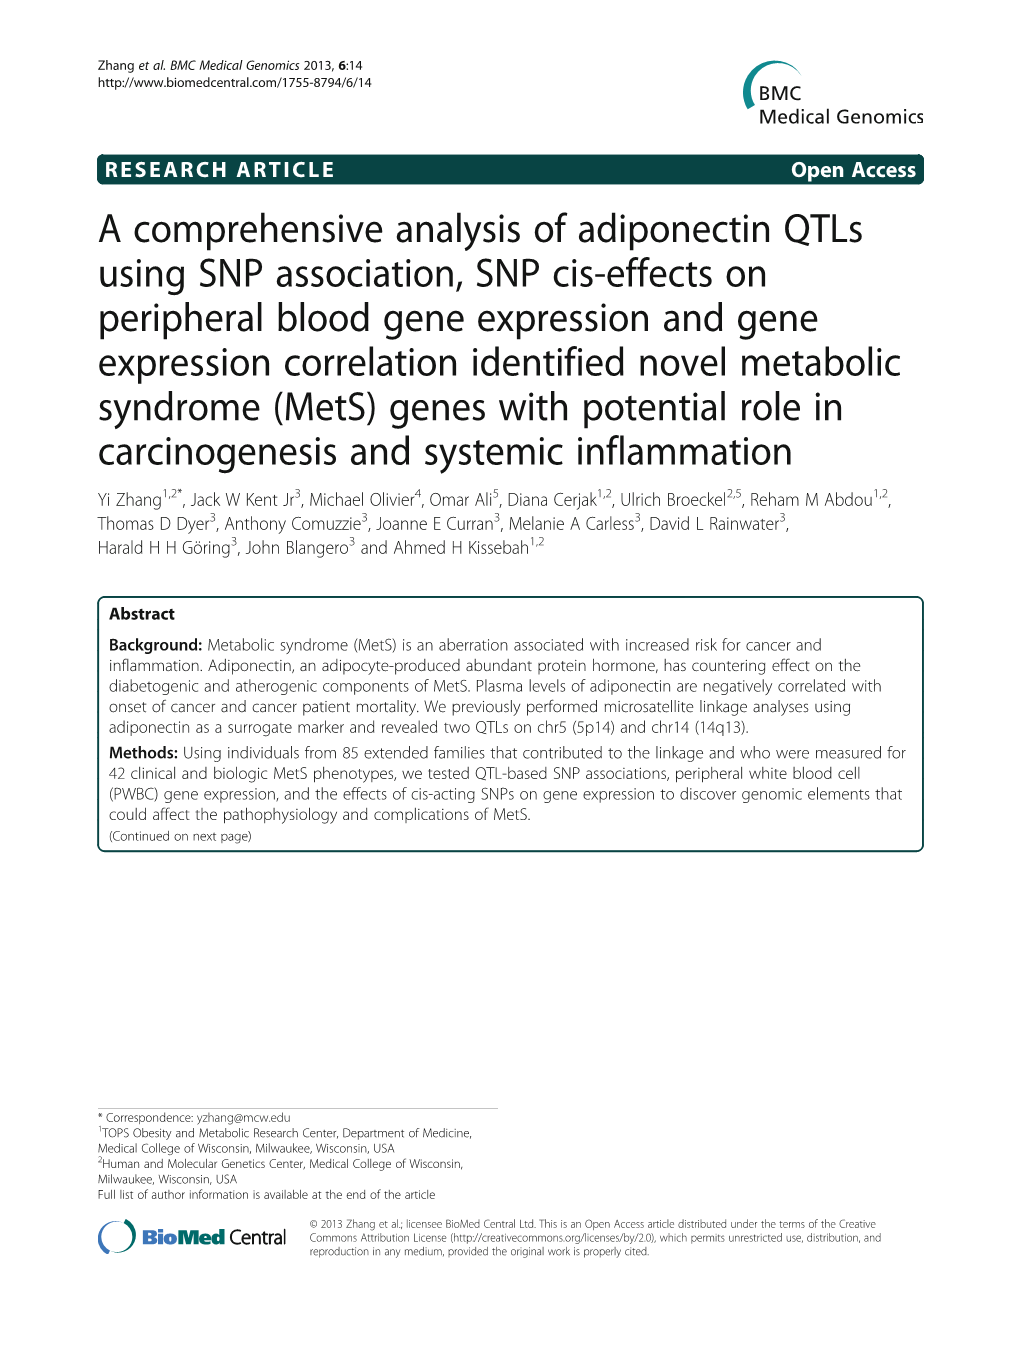 A Comprehensive Analysis of Adiponectin Qtls Using SNP